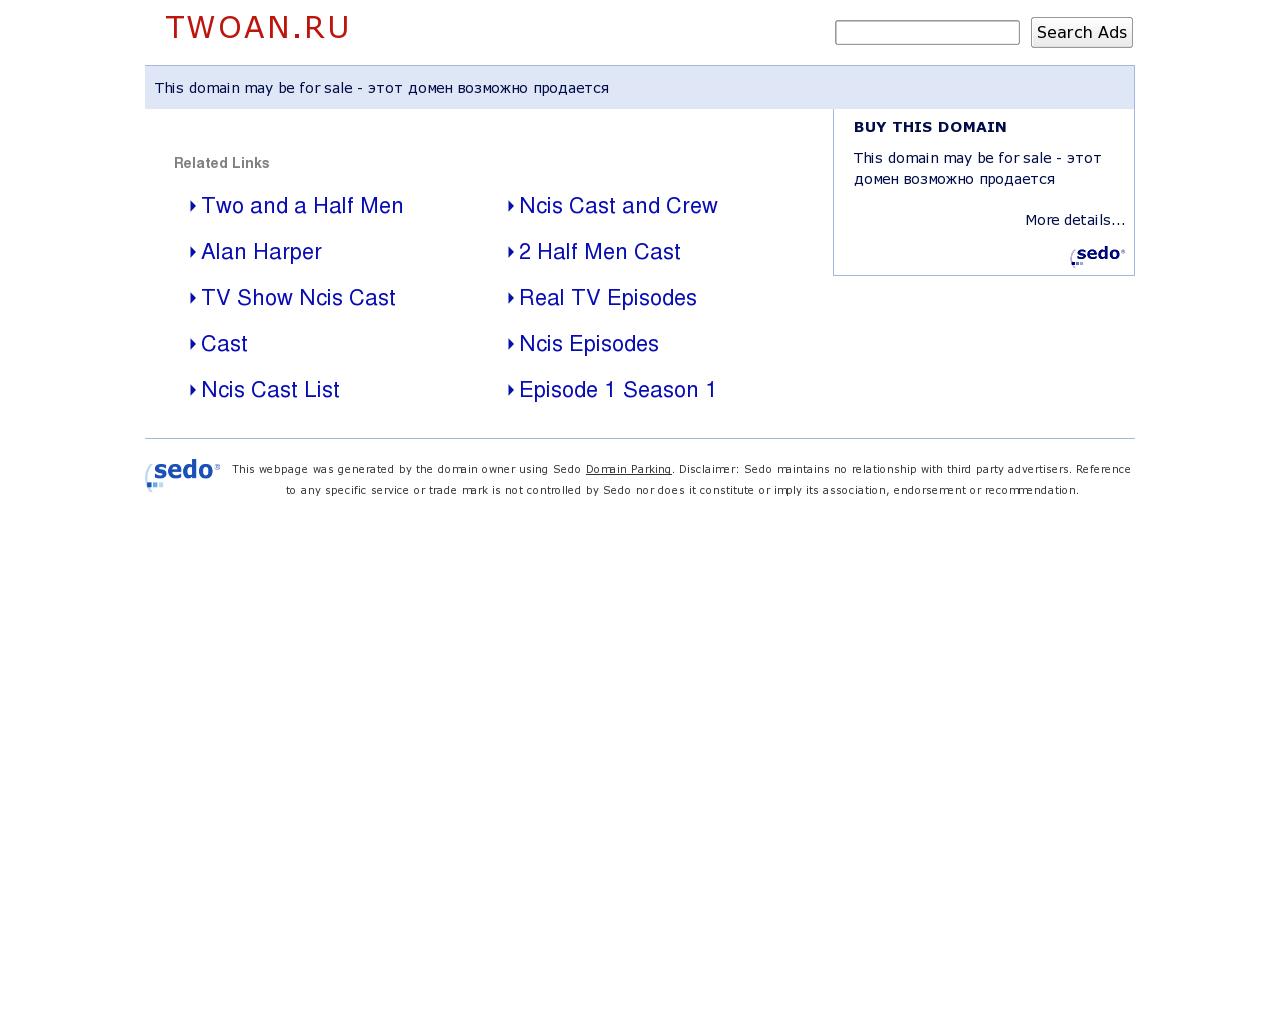 Изображение сайта twoan.ru в разрешении 1280x1024